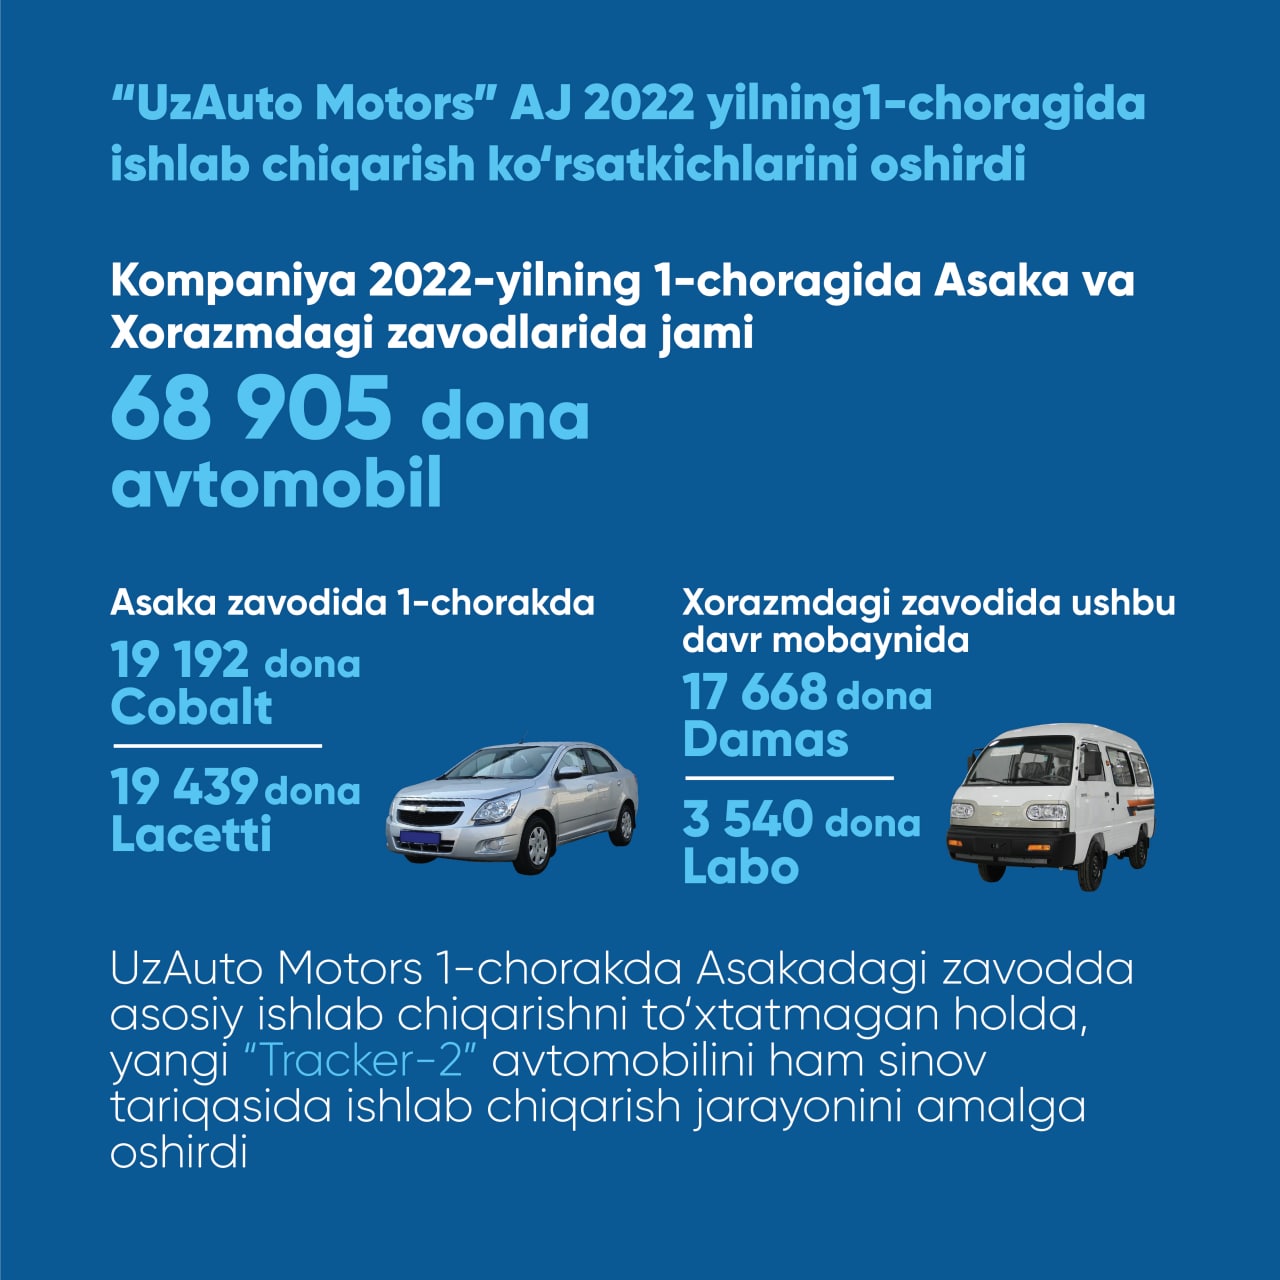 Компания АО «UzAuto Motors» нарастила показатели производства в 1 квартале 2022 года